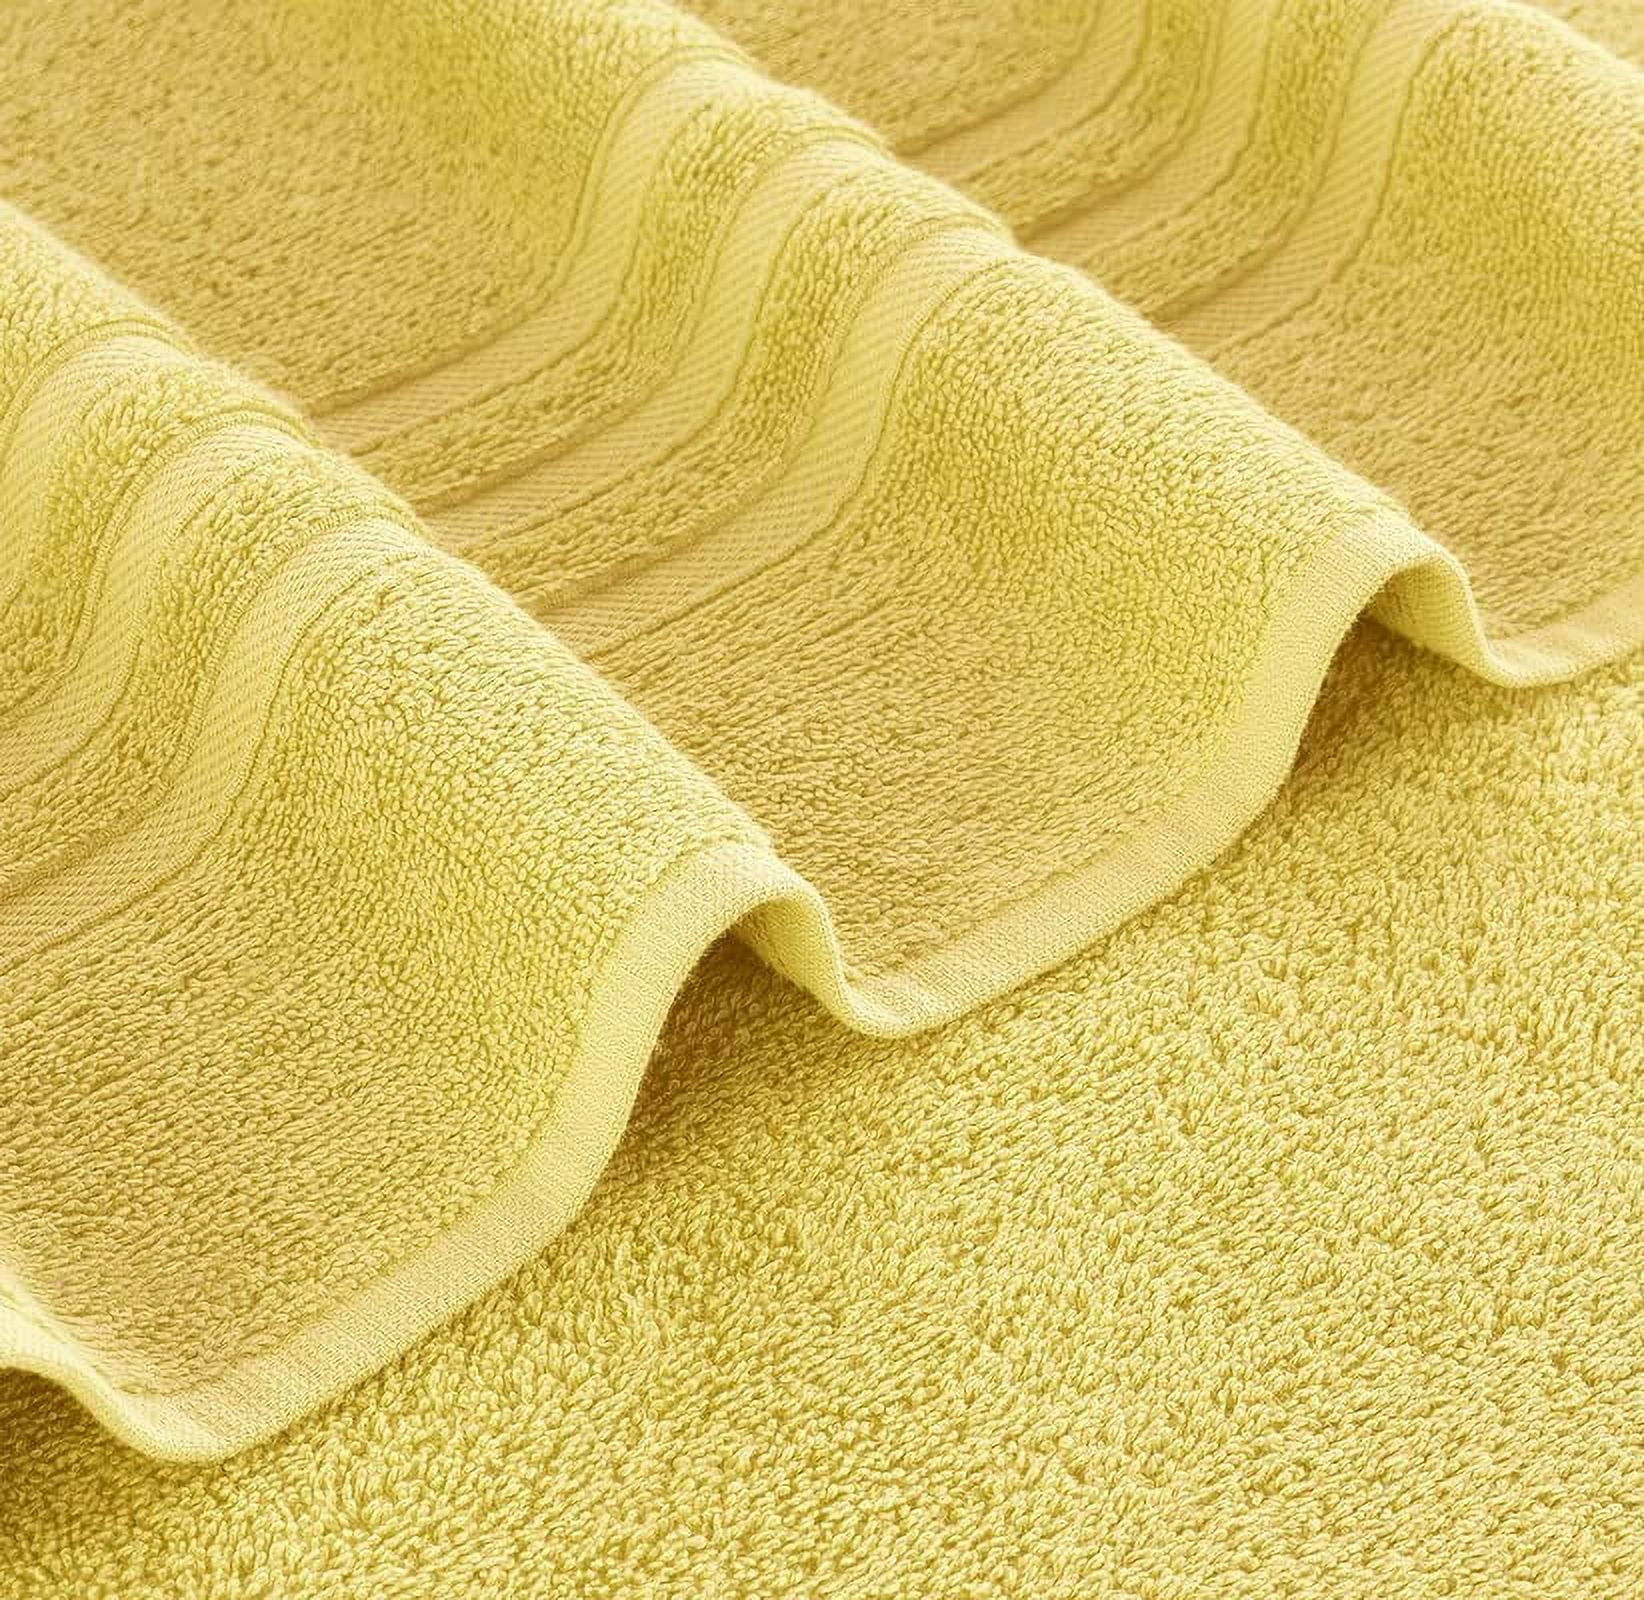  IDORESPELL Luxury Bath Towel Sets Yellow White